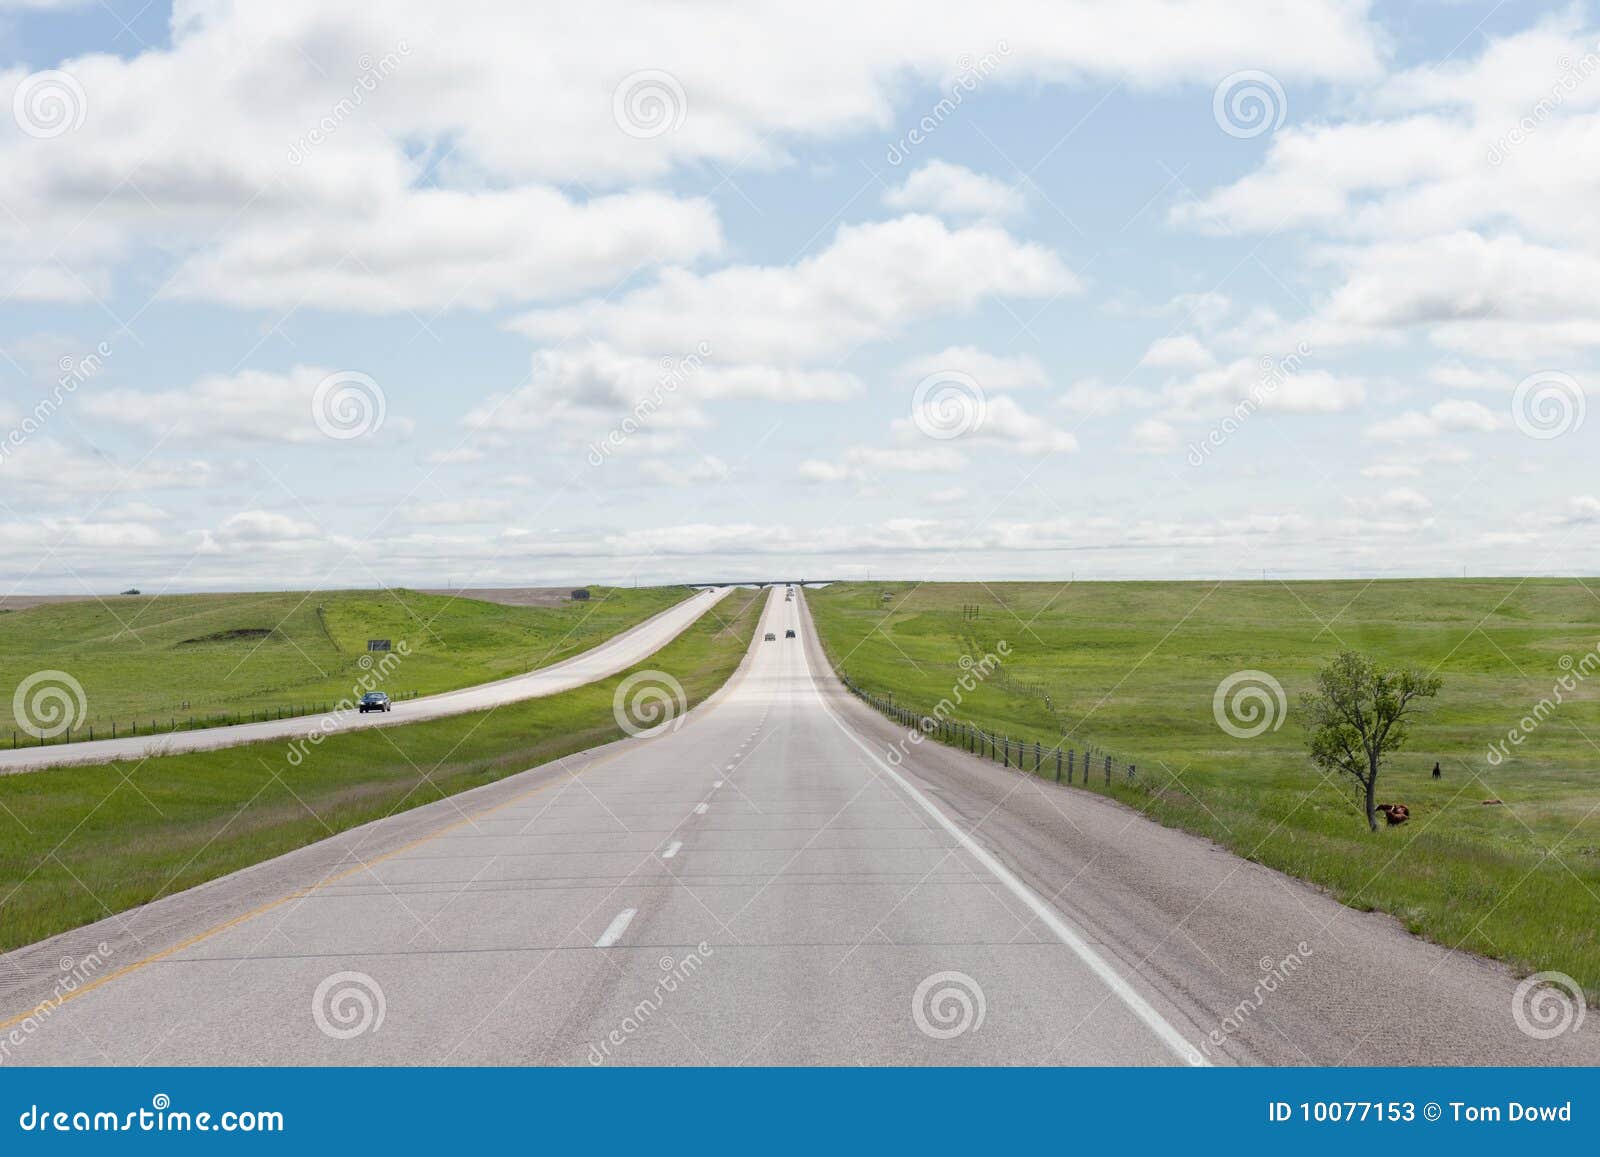 highway receding into distance